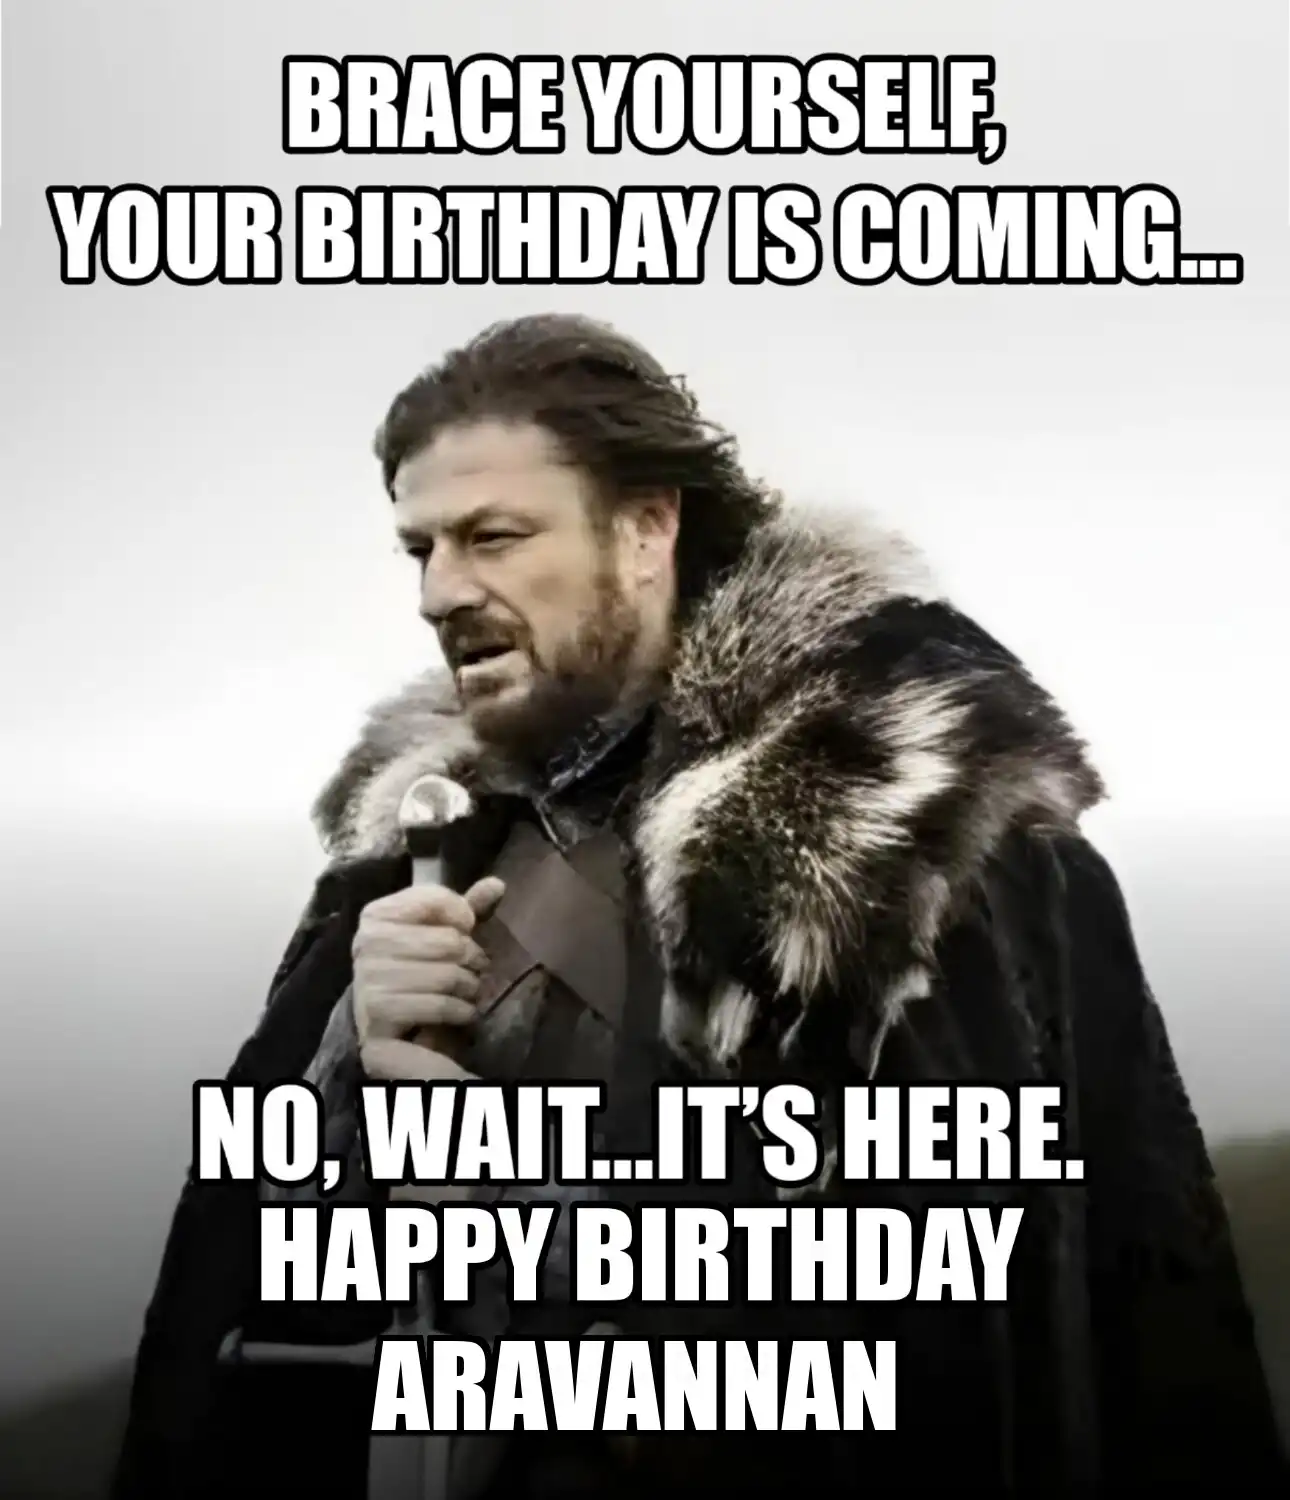 Happy Birthday Aravannan Brace Yourself Your Birthday Is Coming Meme